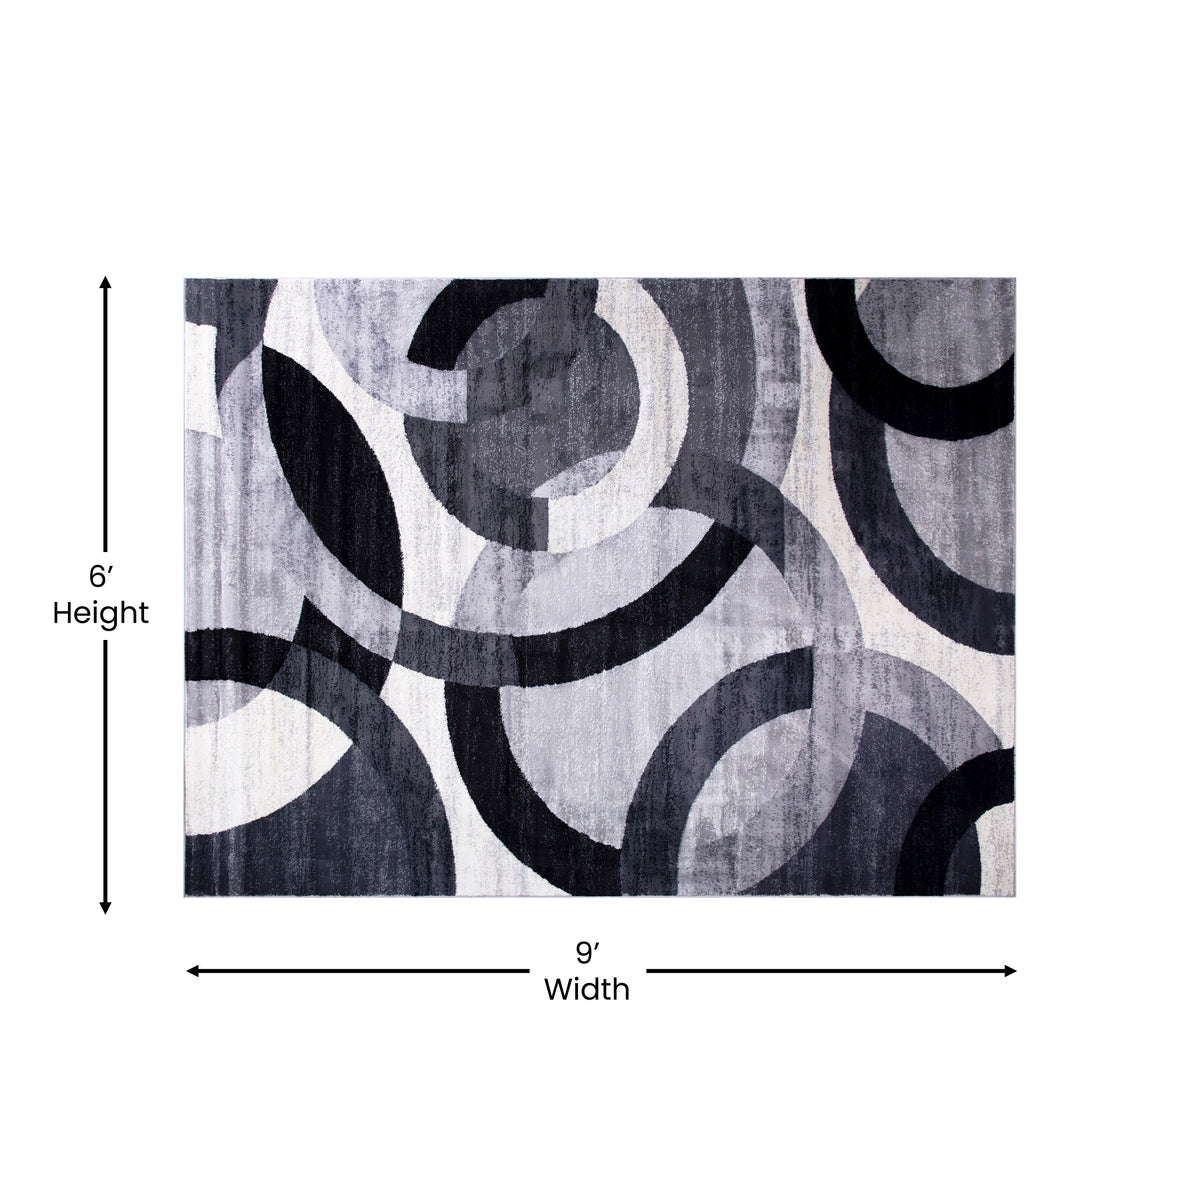 Gray,6' x 9' |#| Modern Geometric Design Area Rug in Black, Gray, and White - 6' x 9'